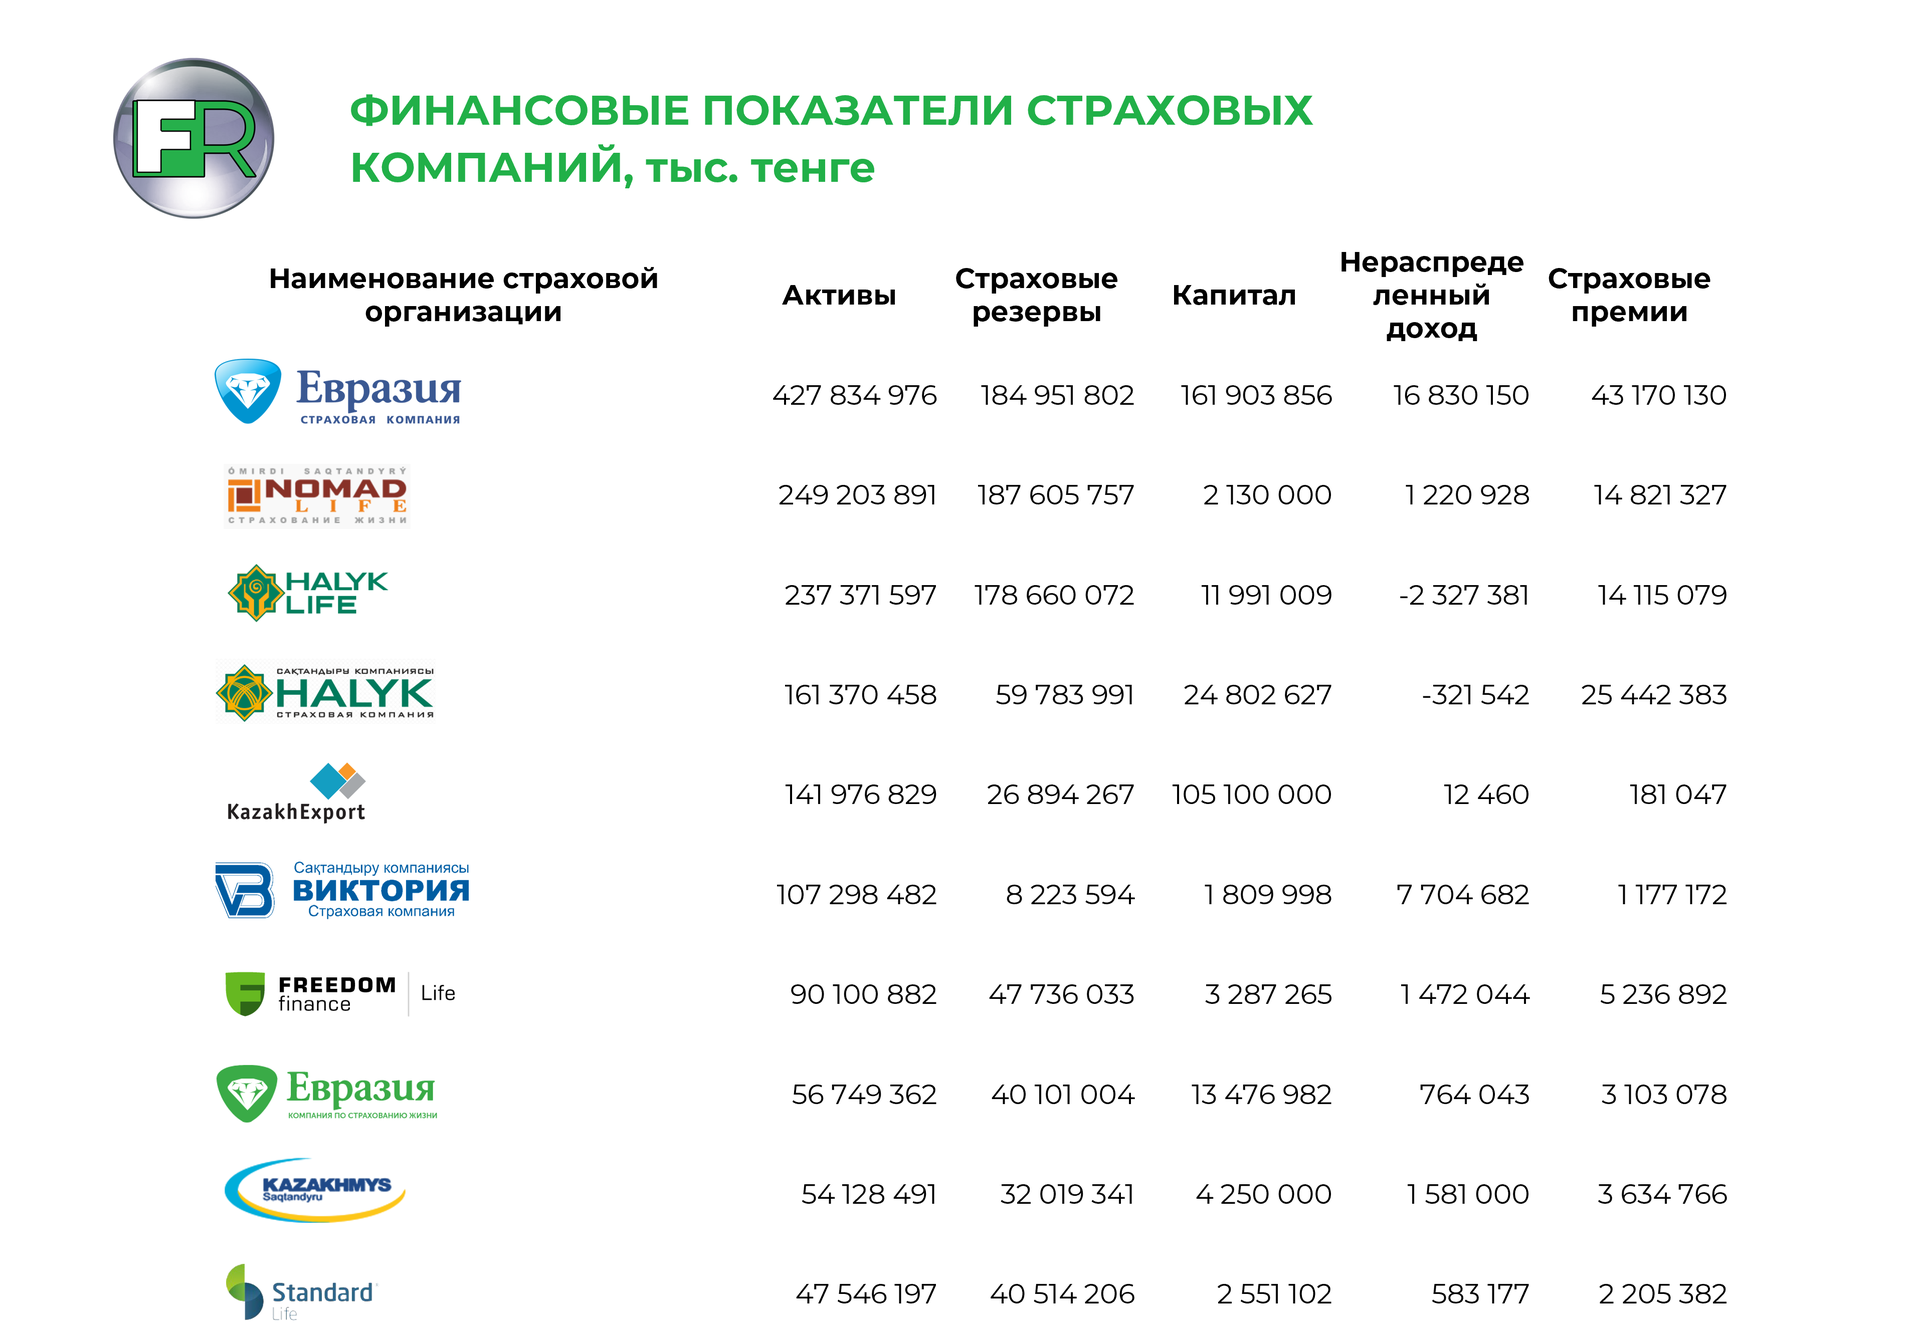 О рисках и перспективах развития страхового рынка Казахстана 1326719 - Kapital.kz 